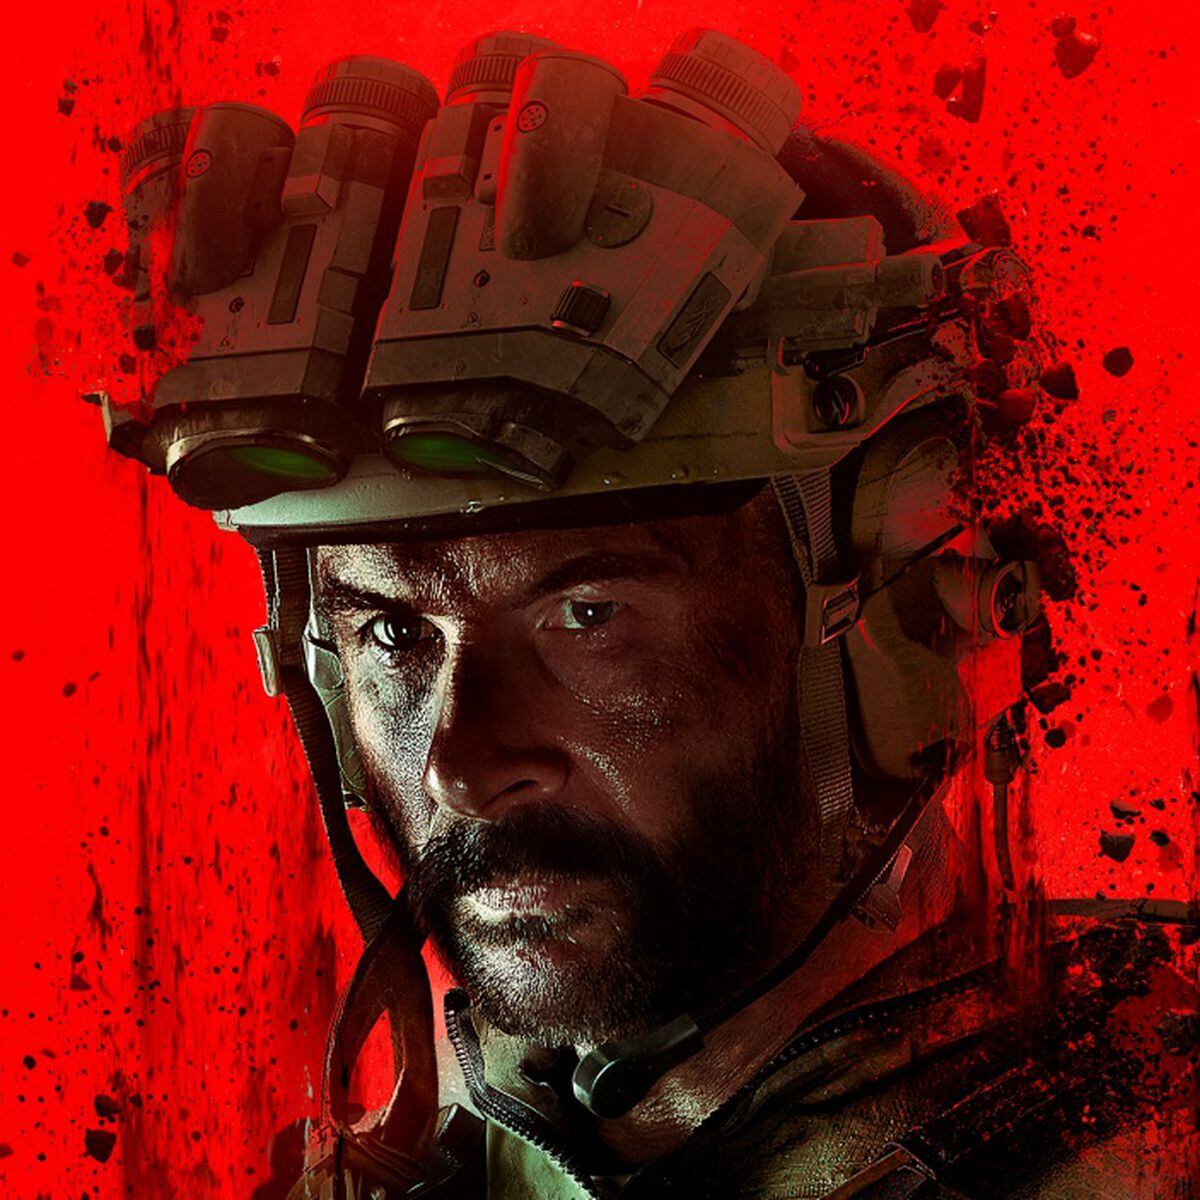 Call Of Duty reveals first trailer for Modern Warfare 3